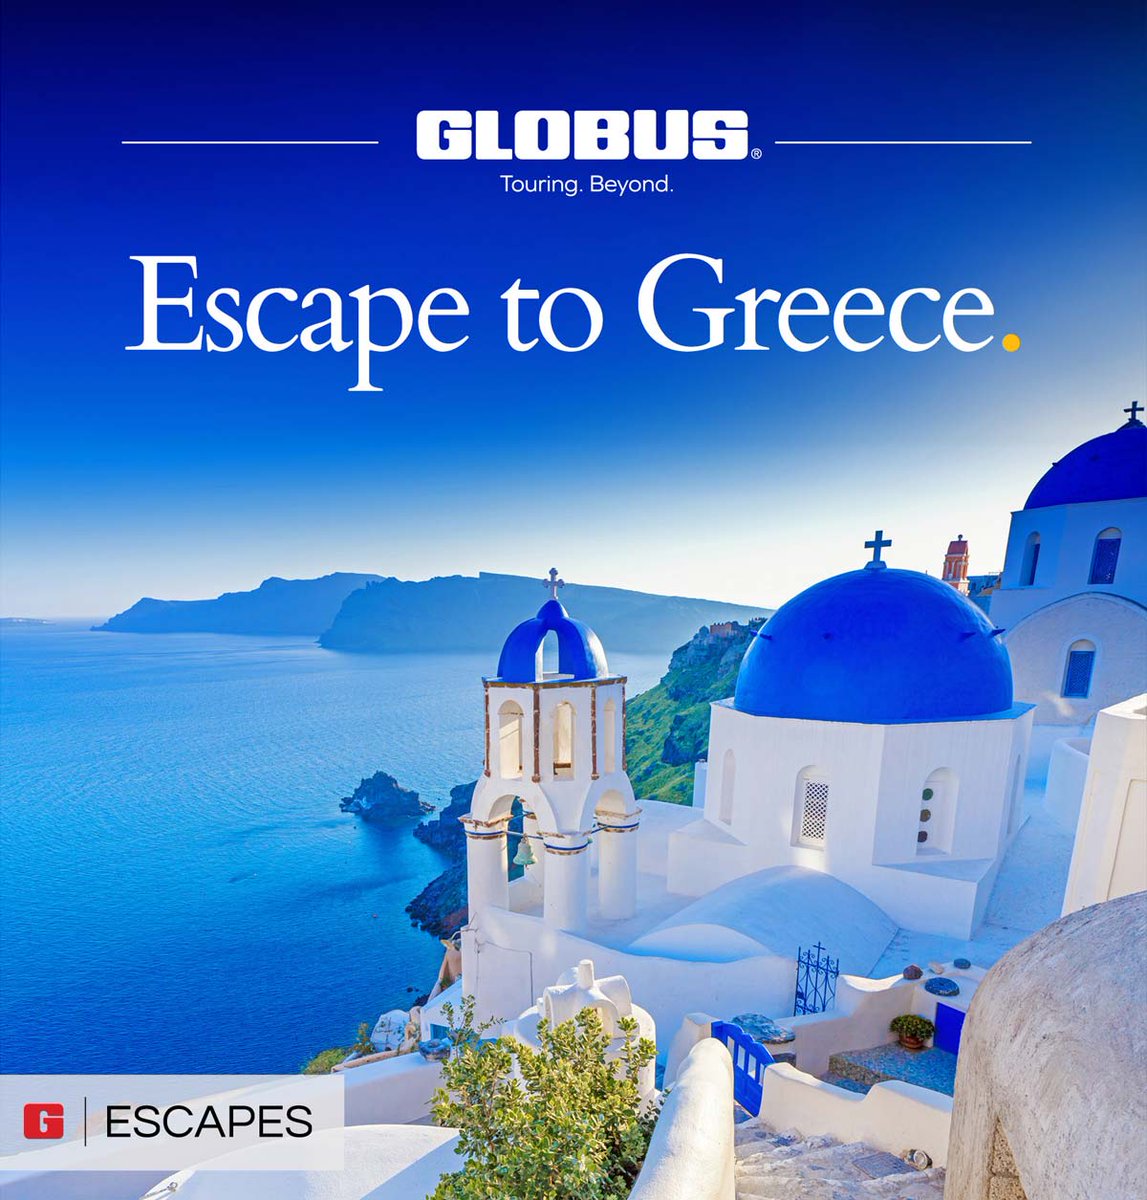 #stsgrouptravel #greece #luxurytraveller #luxury #RetireYoungRetireRich #love #smallbusinessbigdreams #follow
agents.globusfamily.com/travel/greek-e…